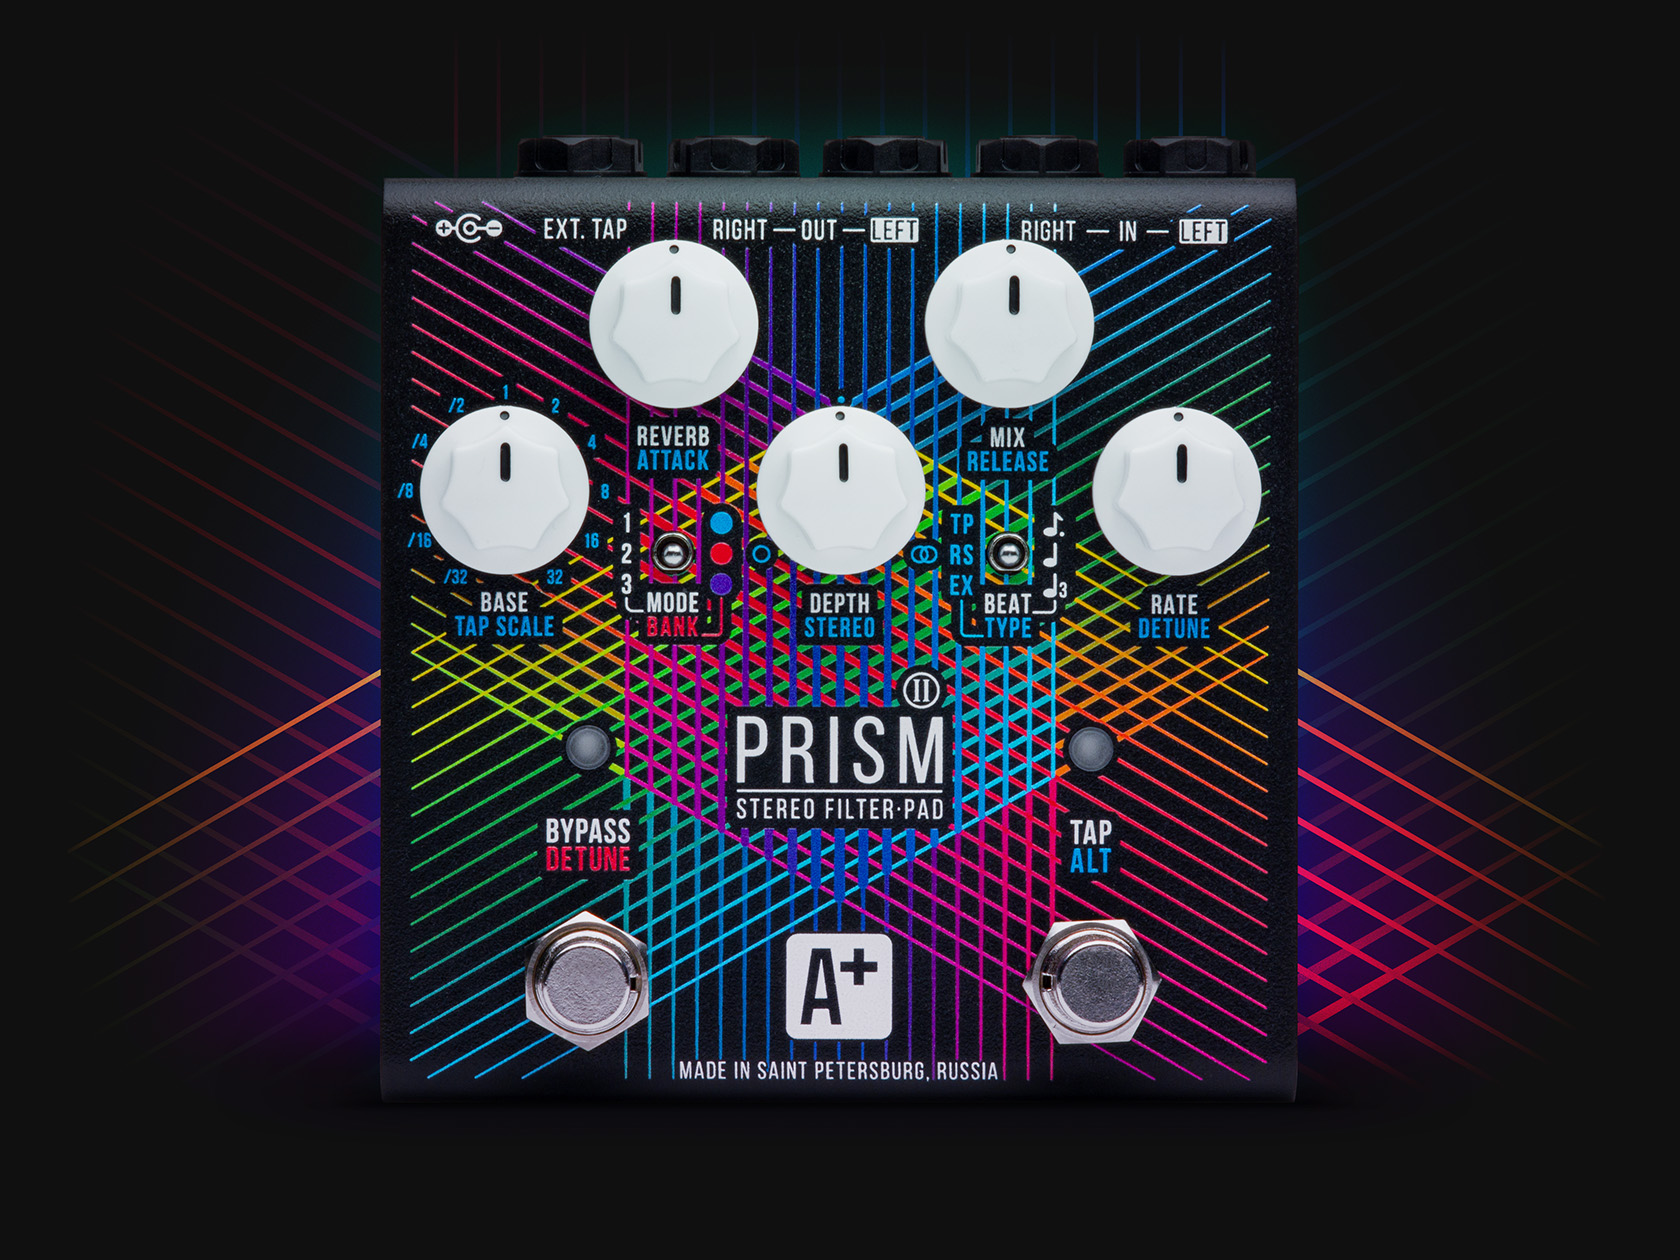 A+ Prism II